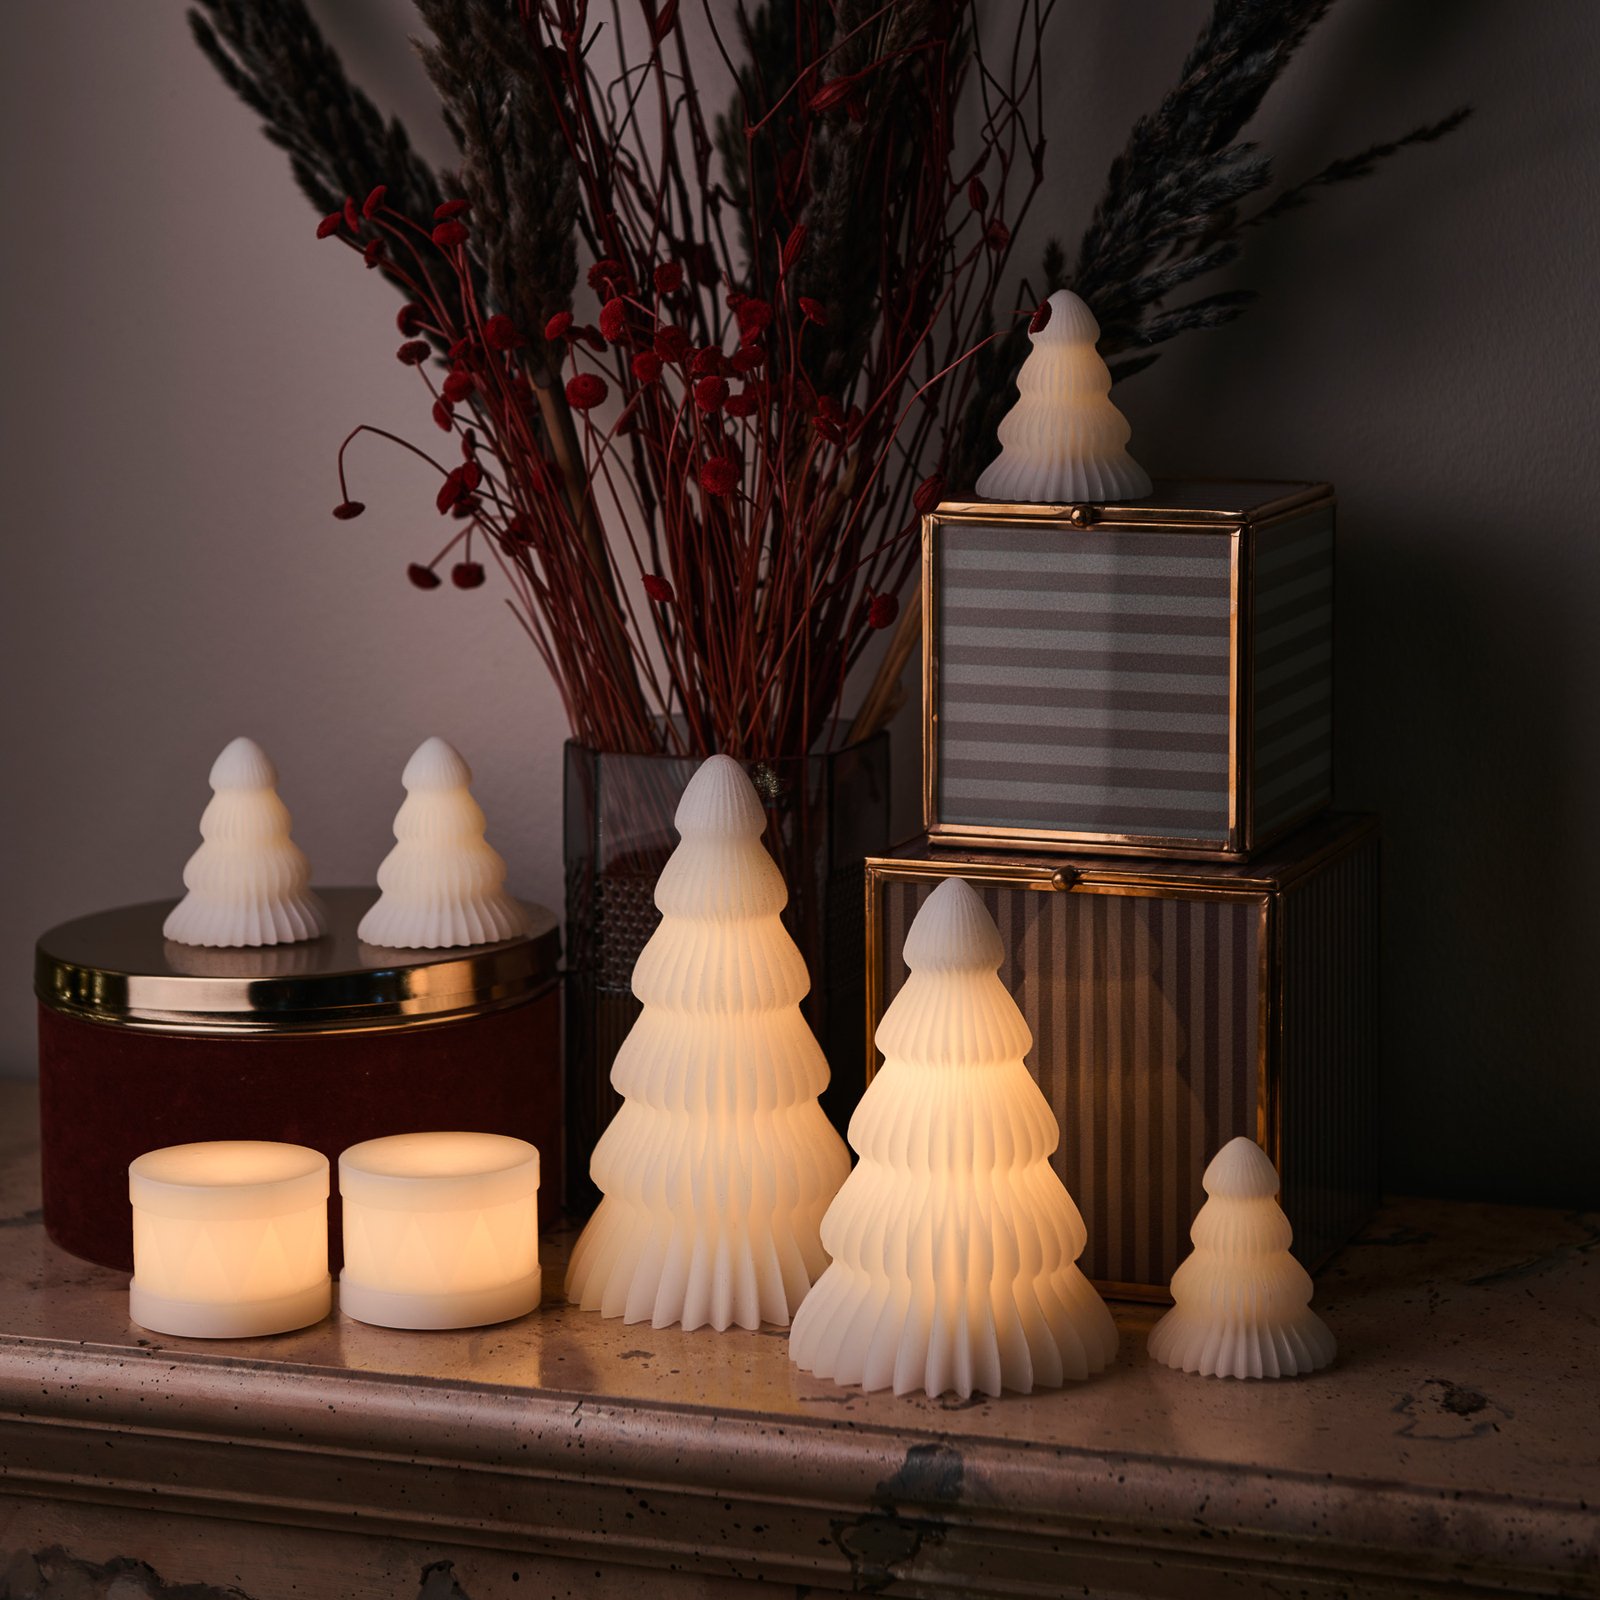 Claire LED decorative light, white wax tree 19cm